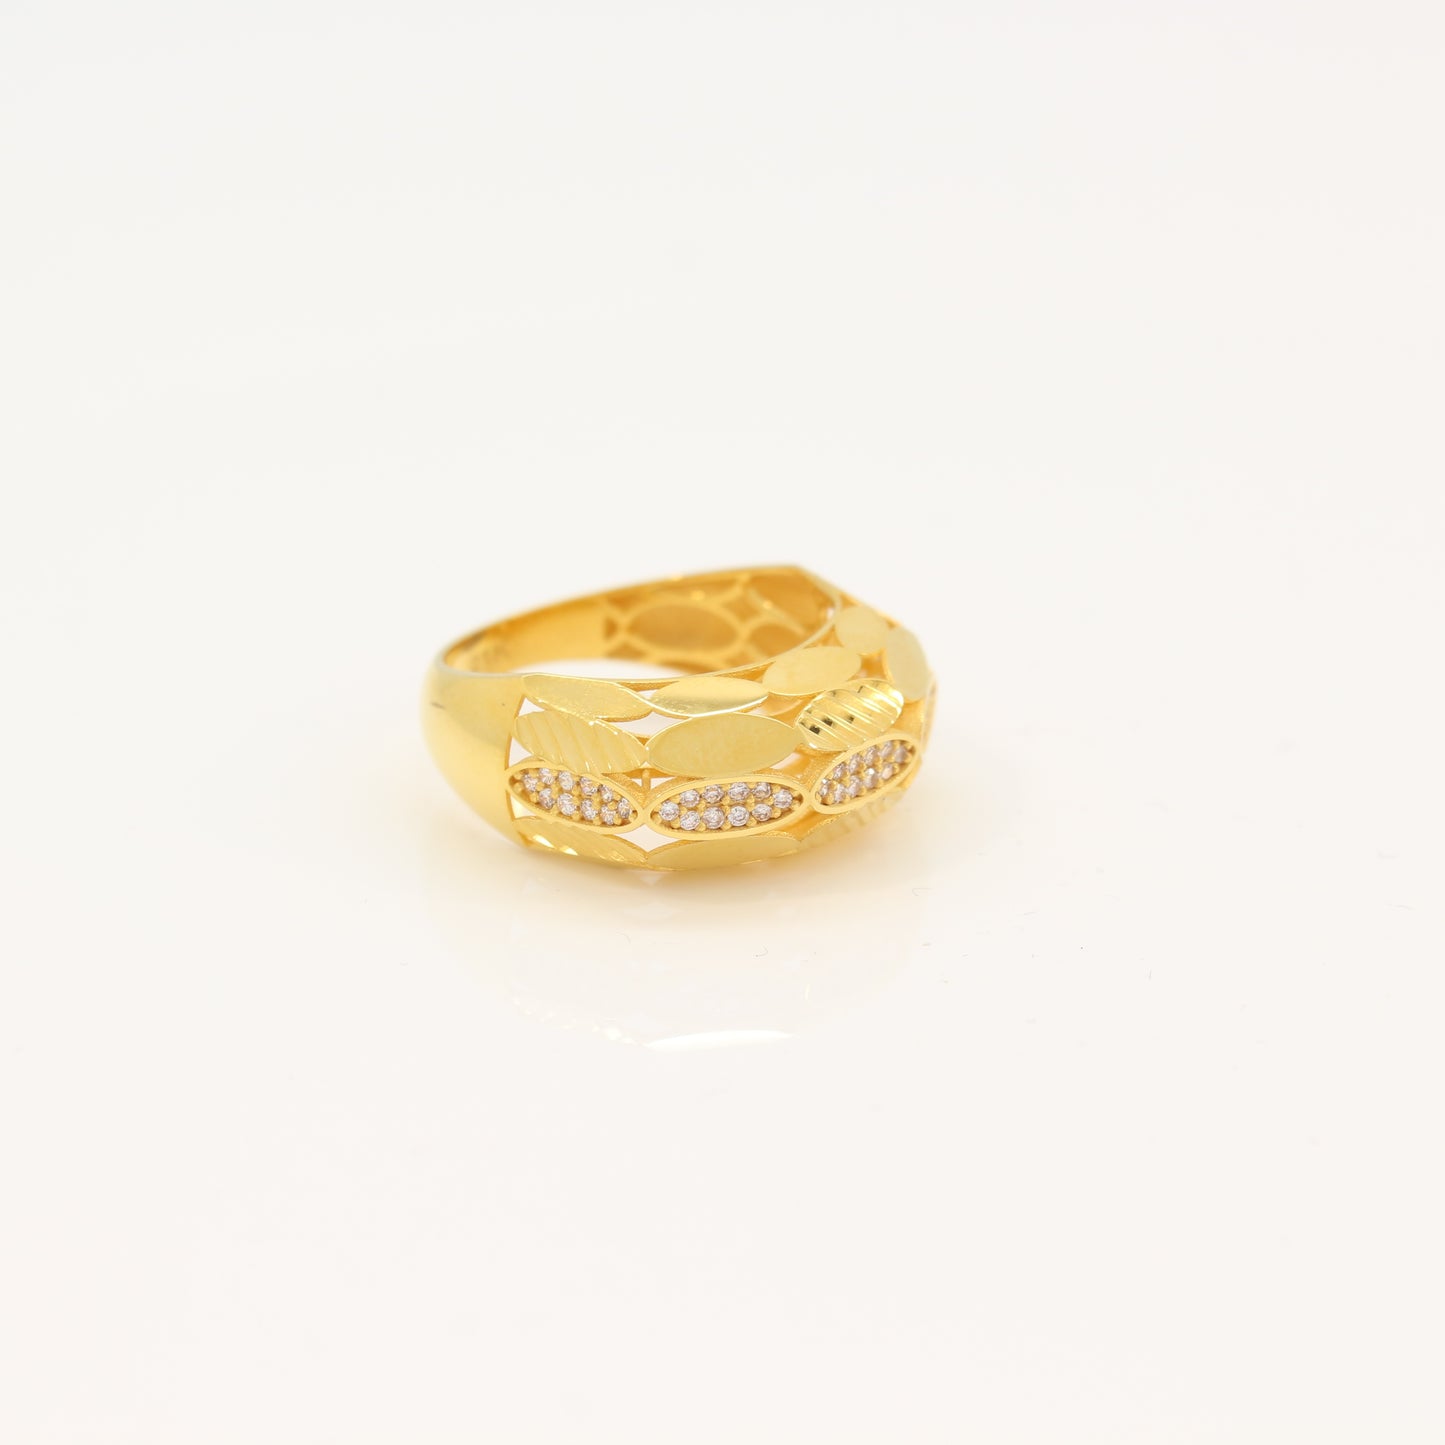 21K Gold Ring (size 9)